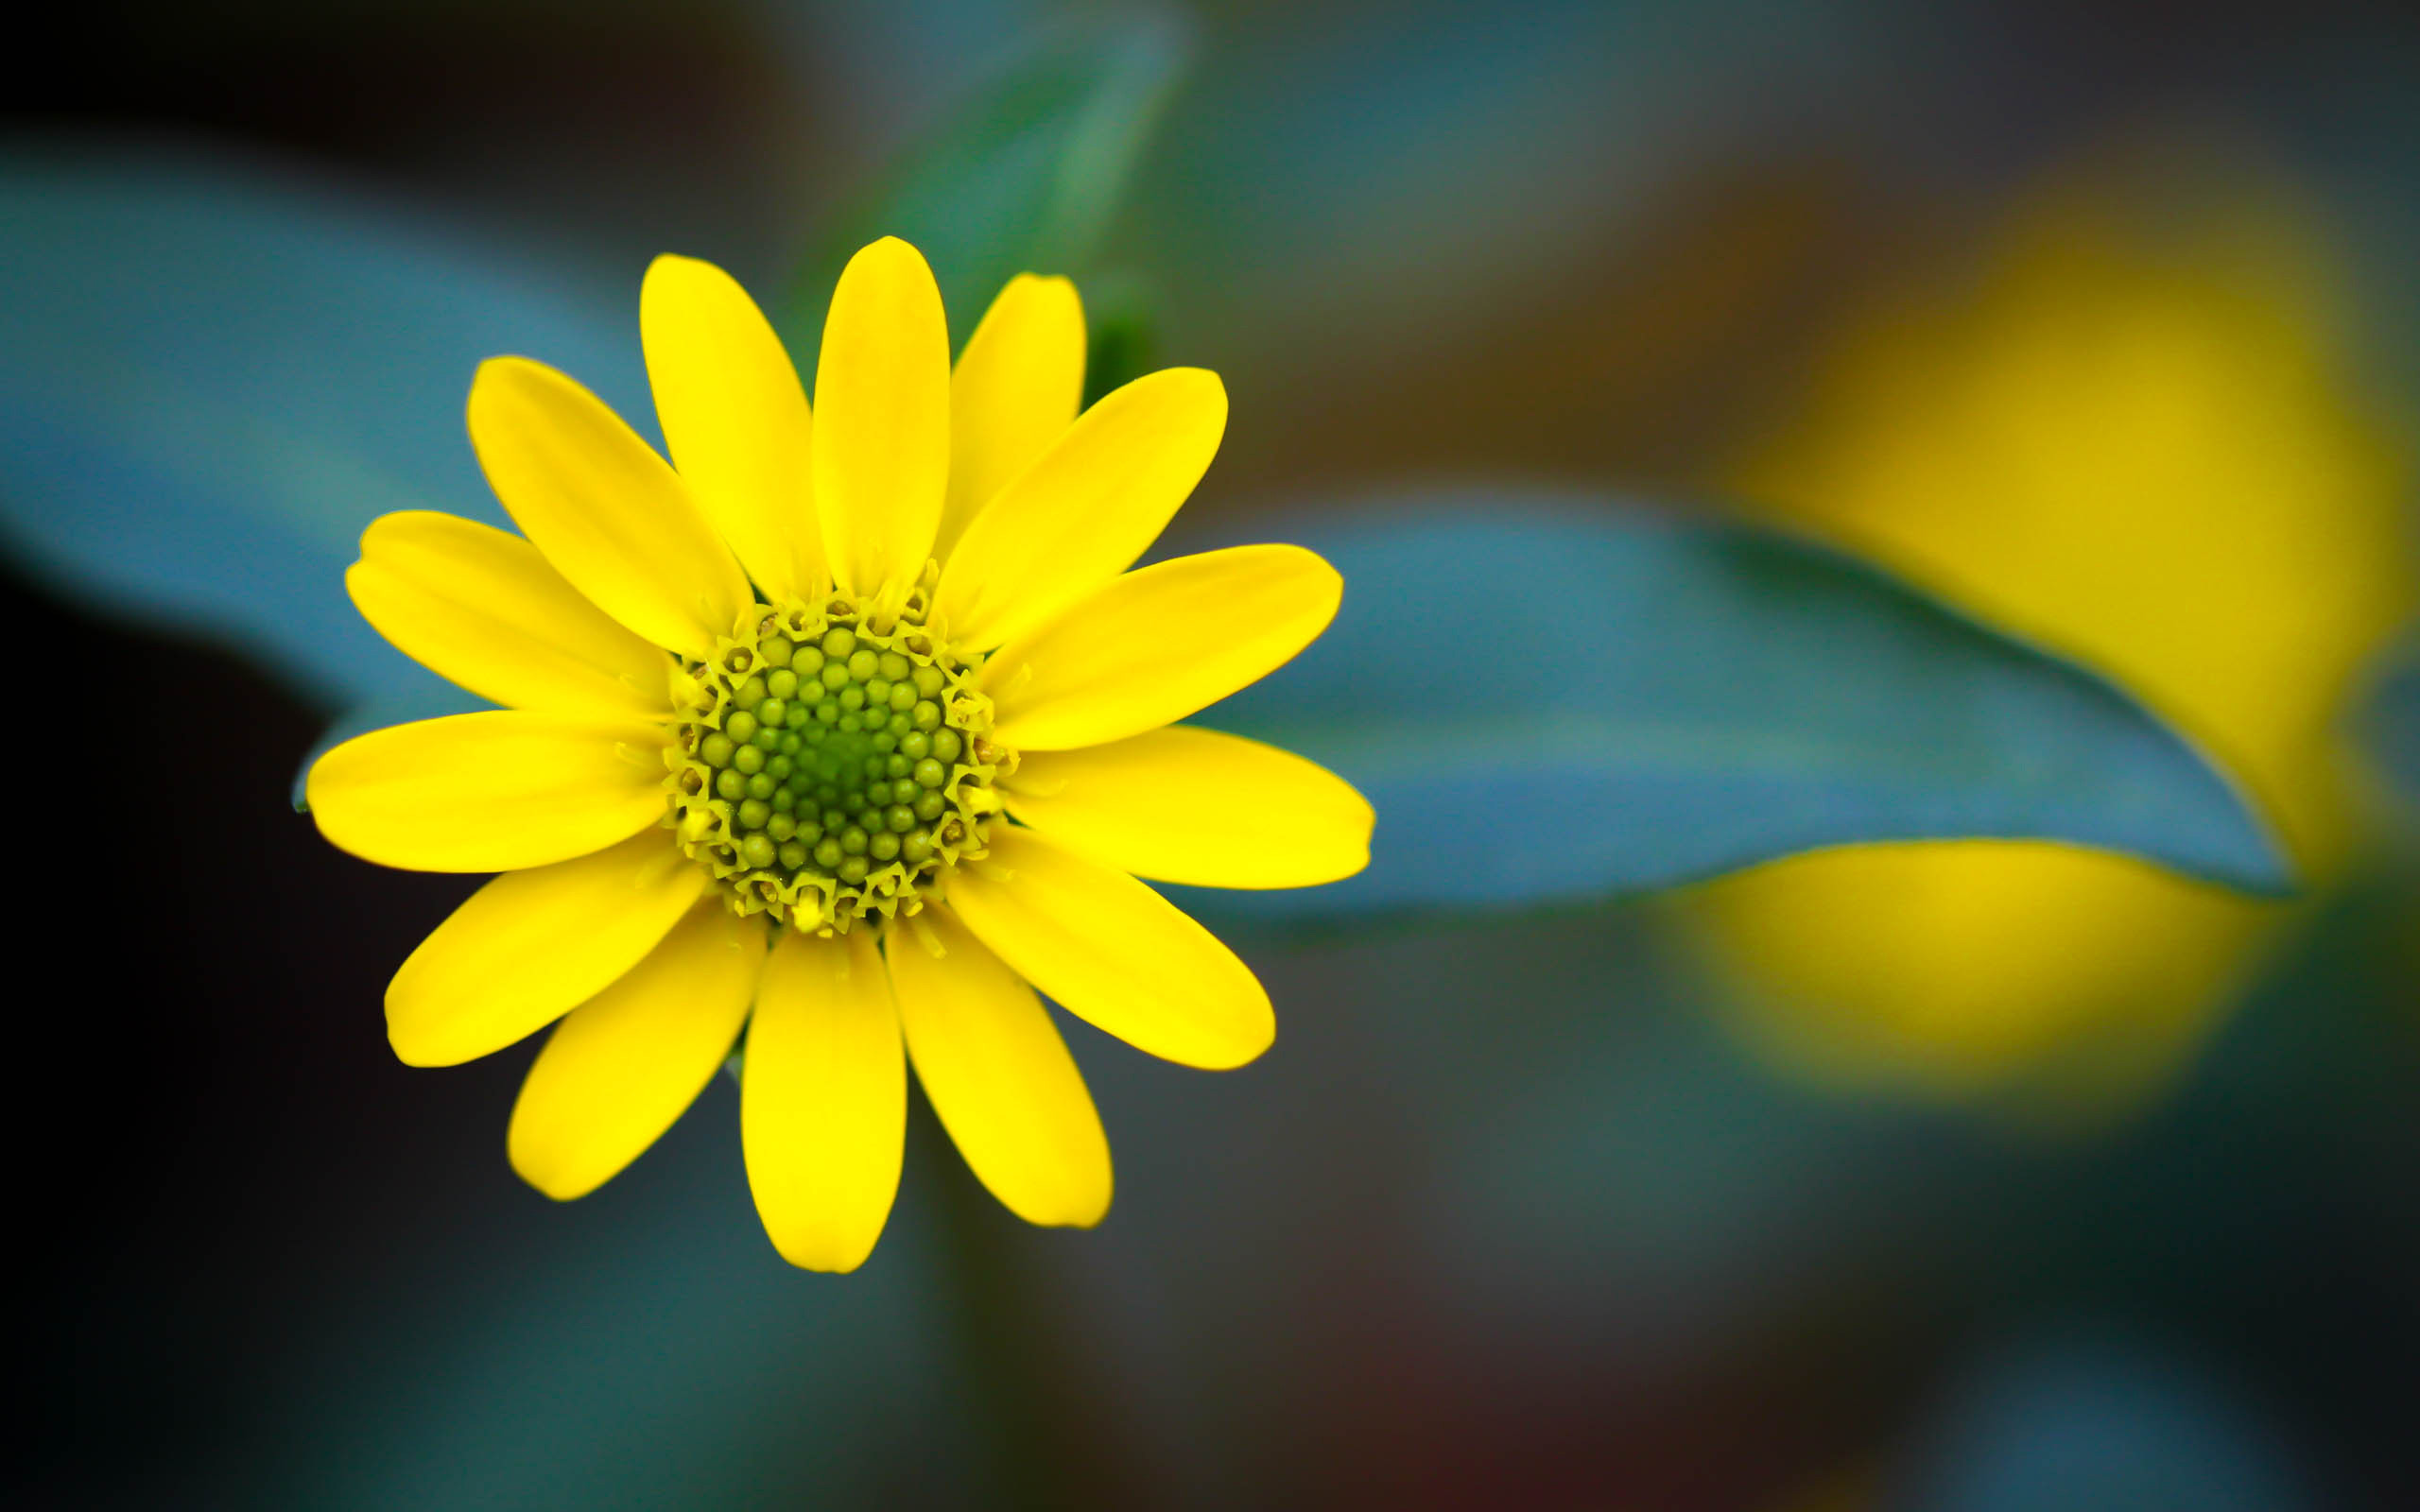 gambar wallpaper bergerak,flower,petal,yellow,macro photography,plant